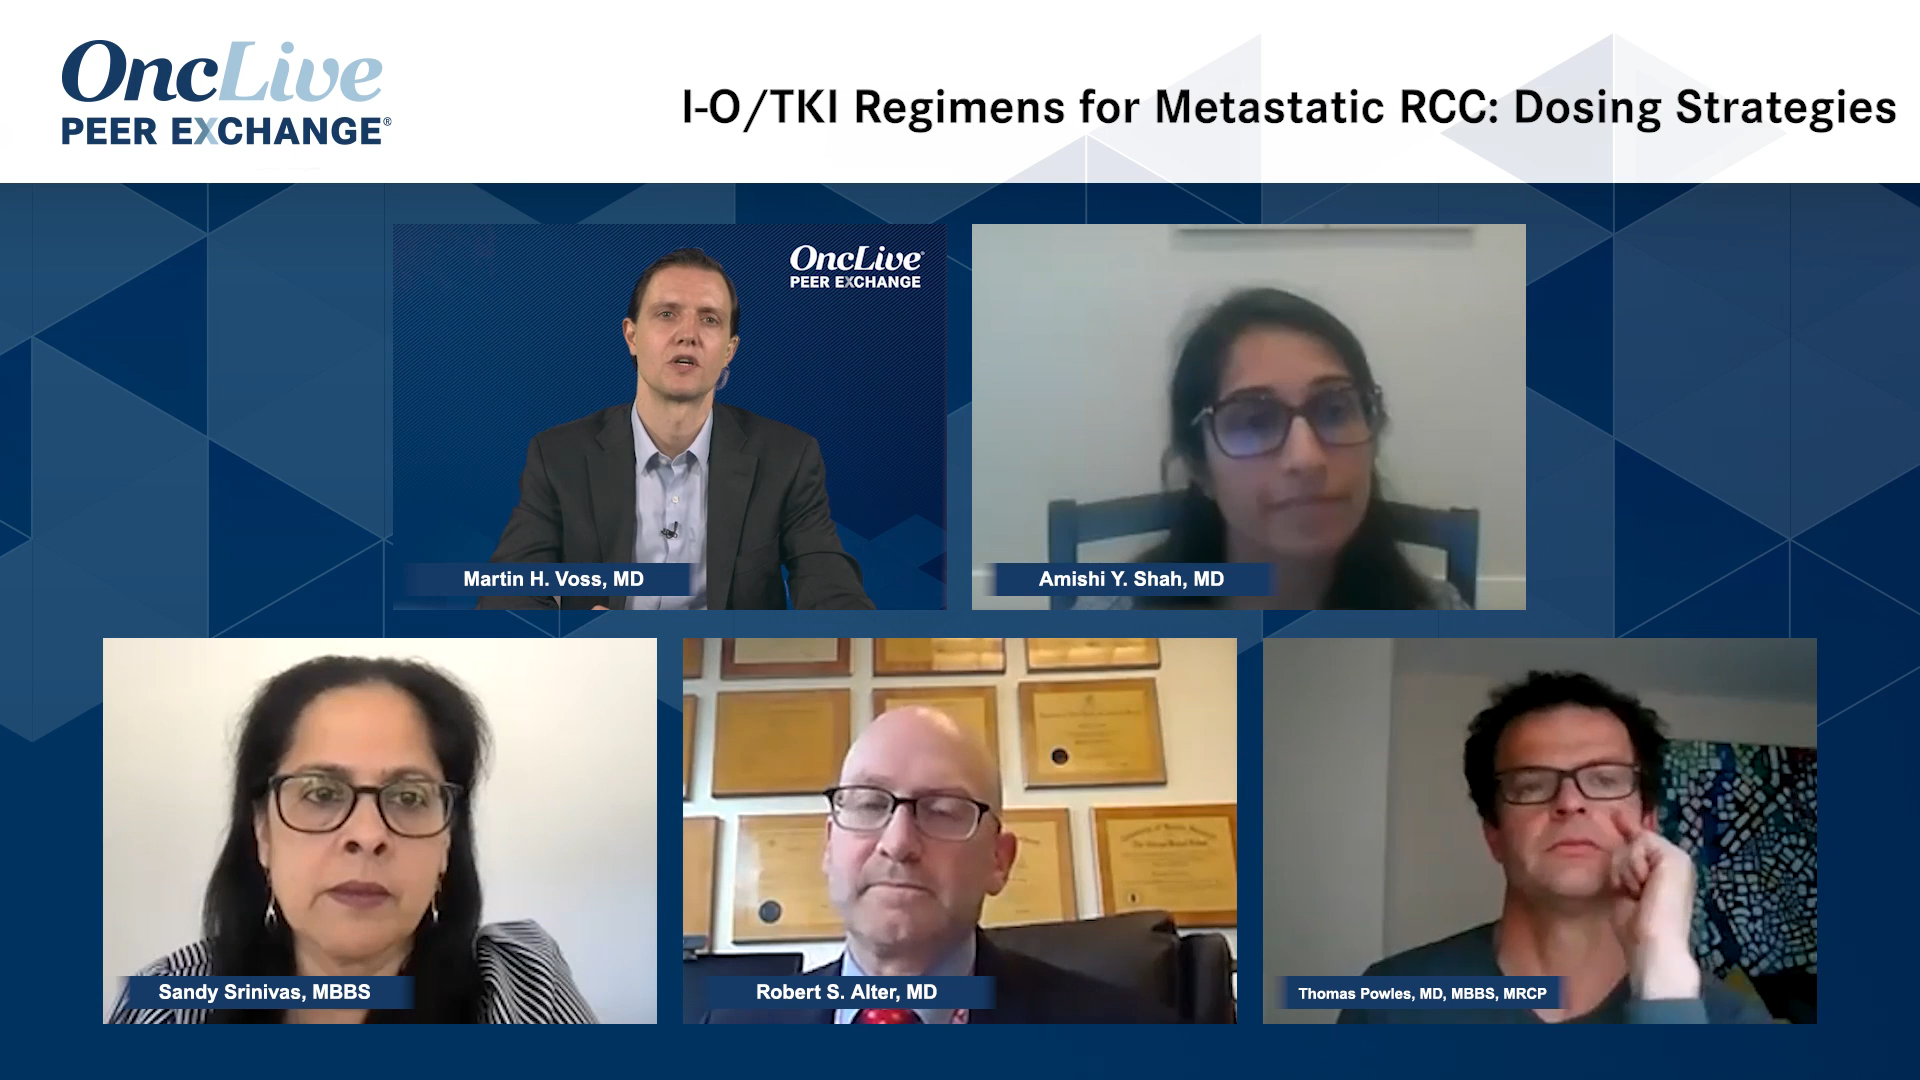 I-O/TKI Regimens for Metastatic RCC: Dosing Strategies